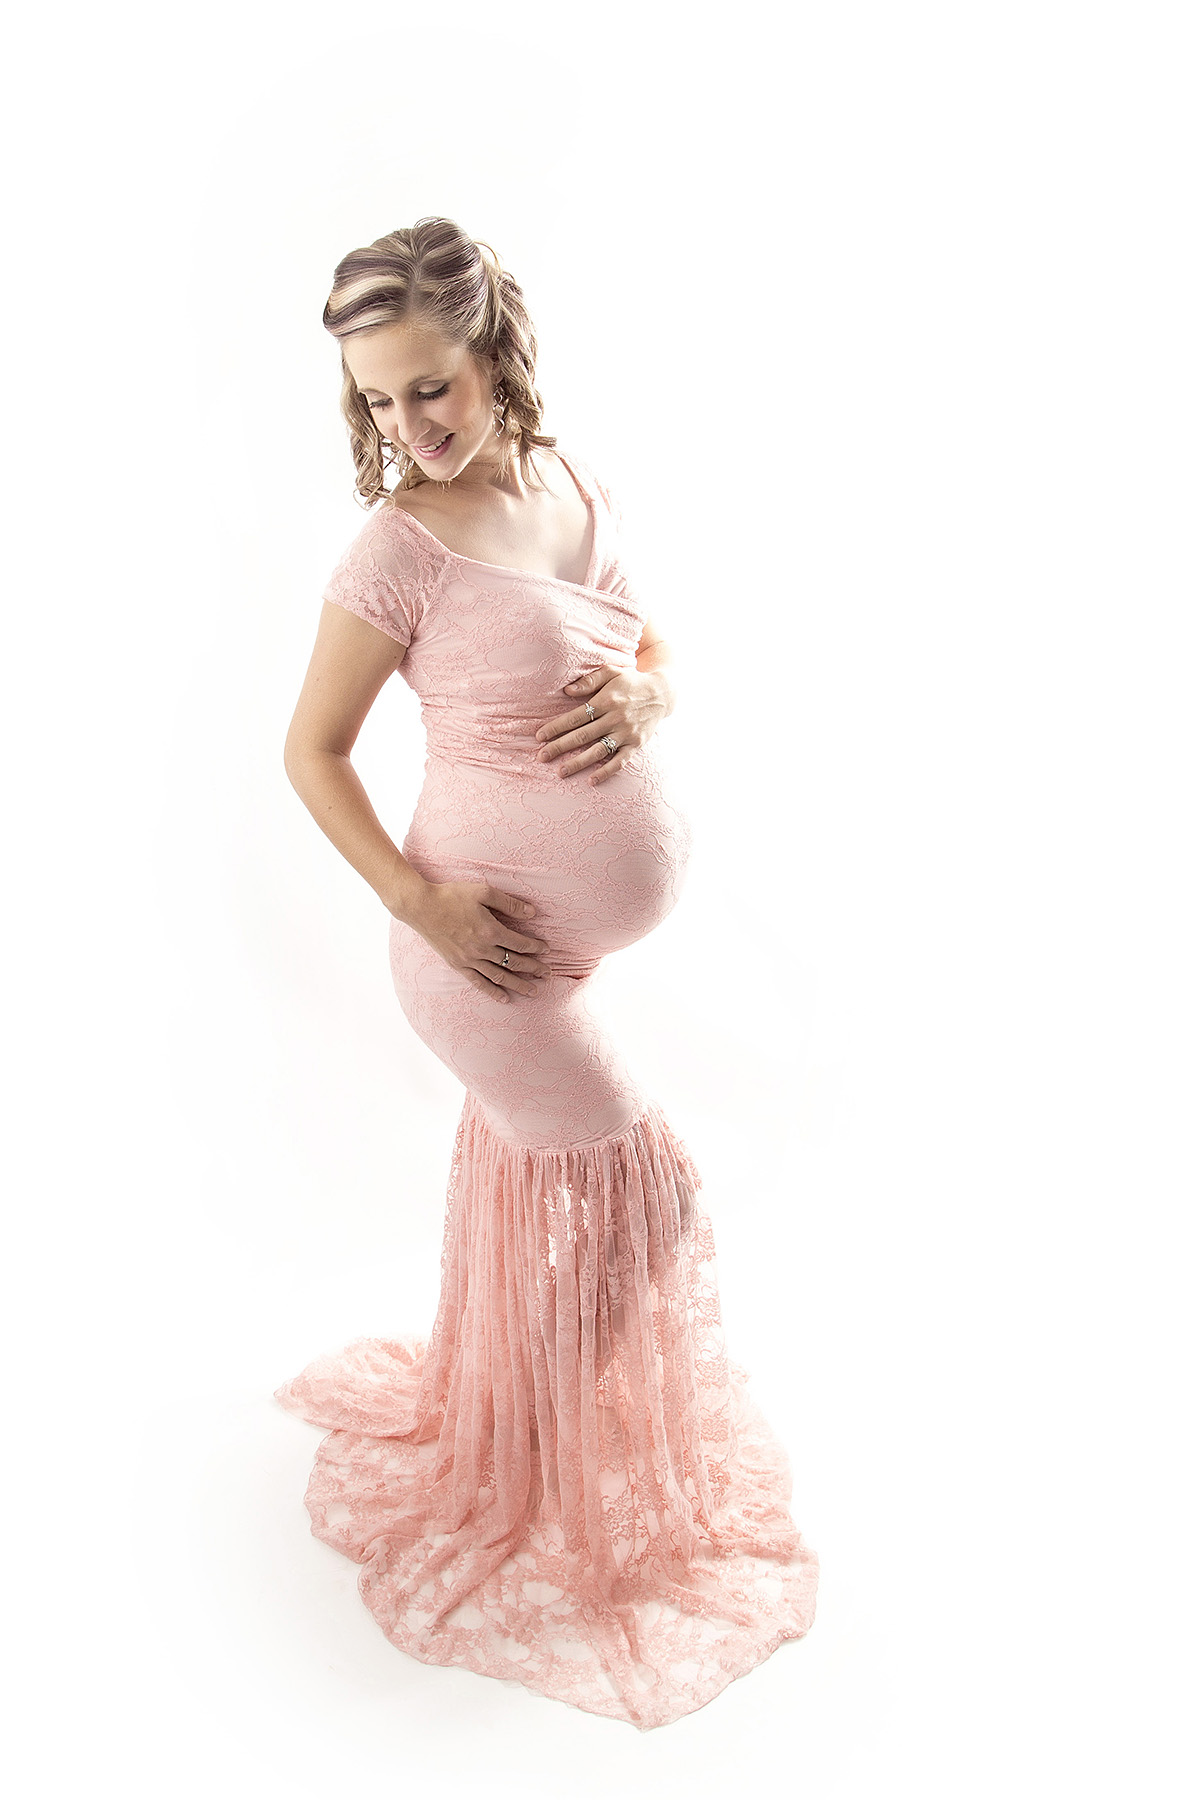 Angie_Englerth_Lancater_Maternity_Photographer_Wardobe_Pink_003.jpg